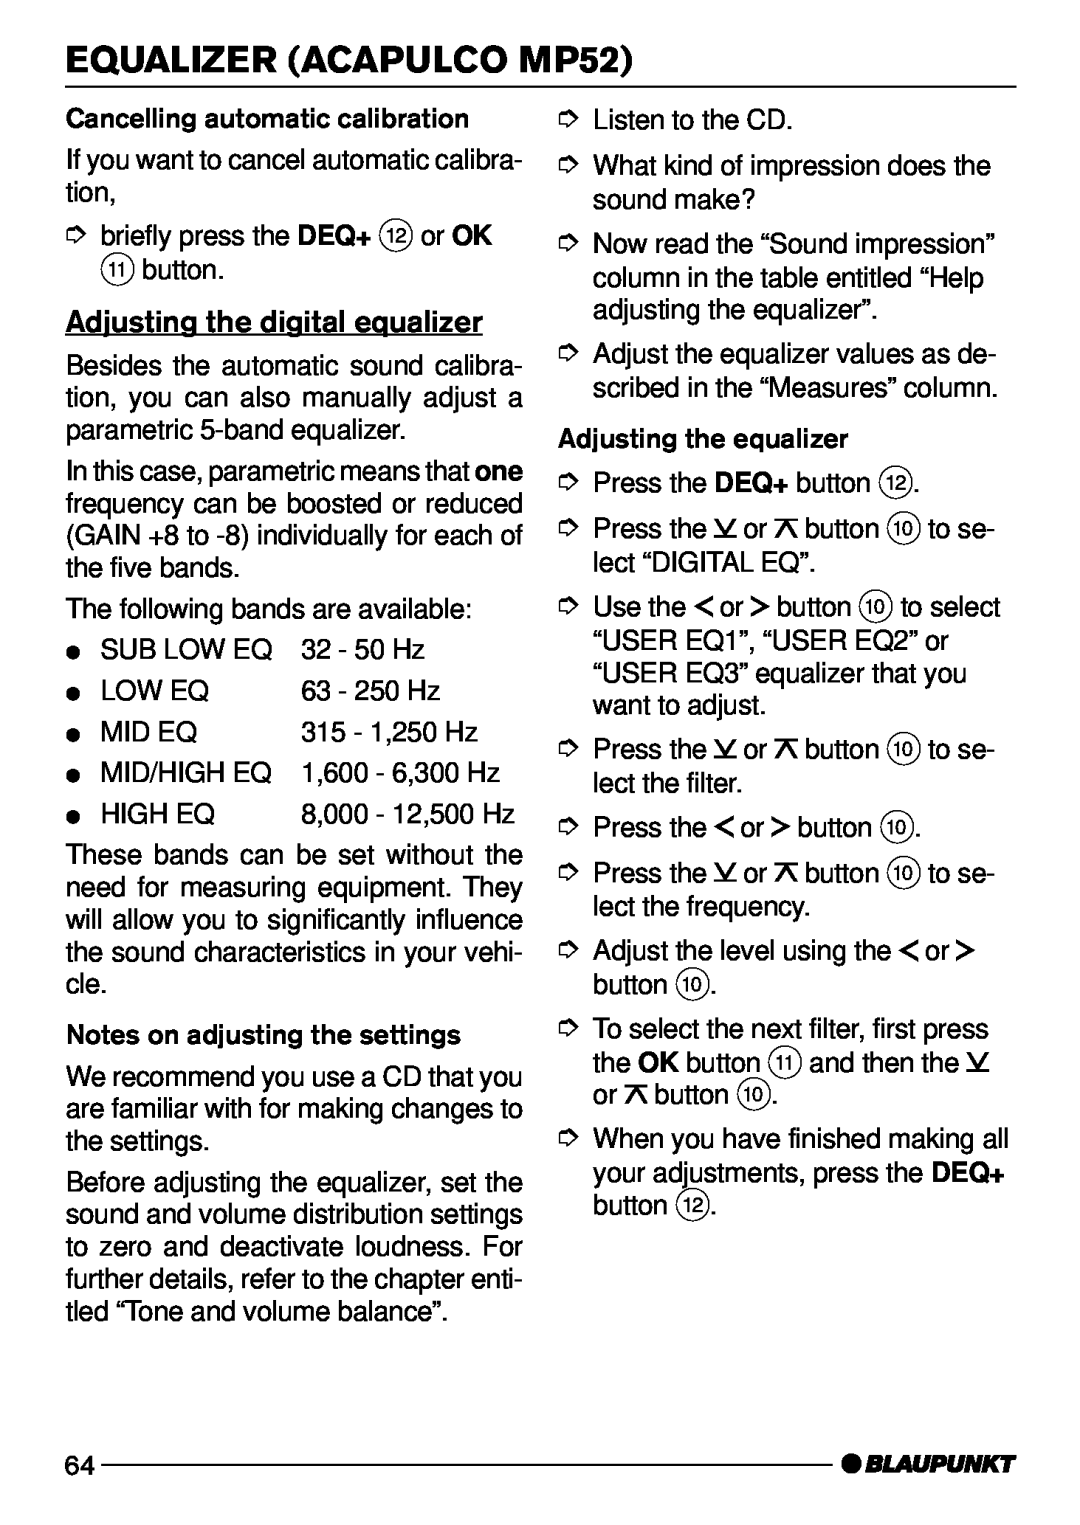 Blaupunkt Acapulco MP52, Daytona MP53 operating instructions Adjusting the digital equalizer, EQUALIZER ACAPULCO MP52 